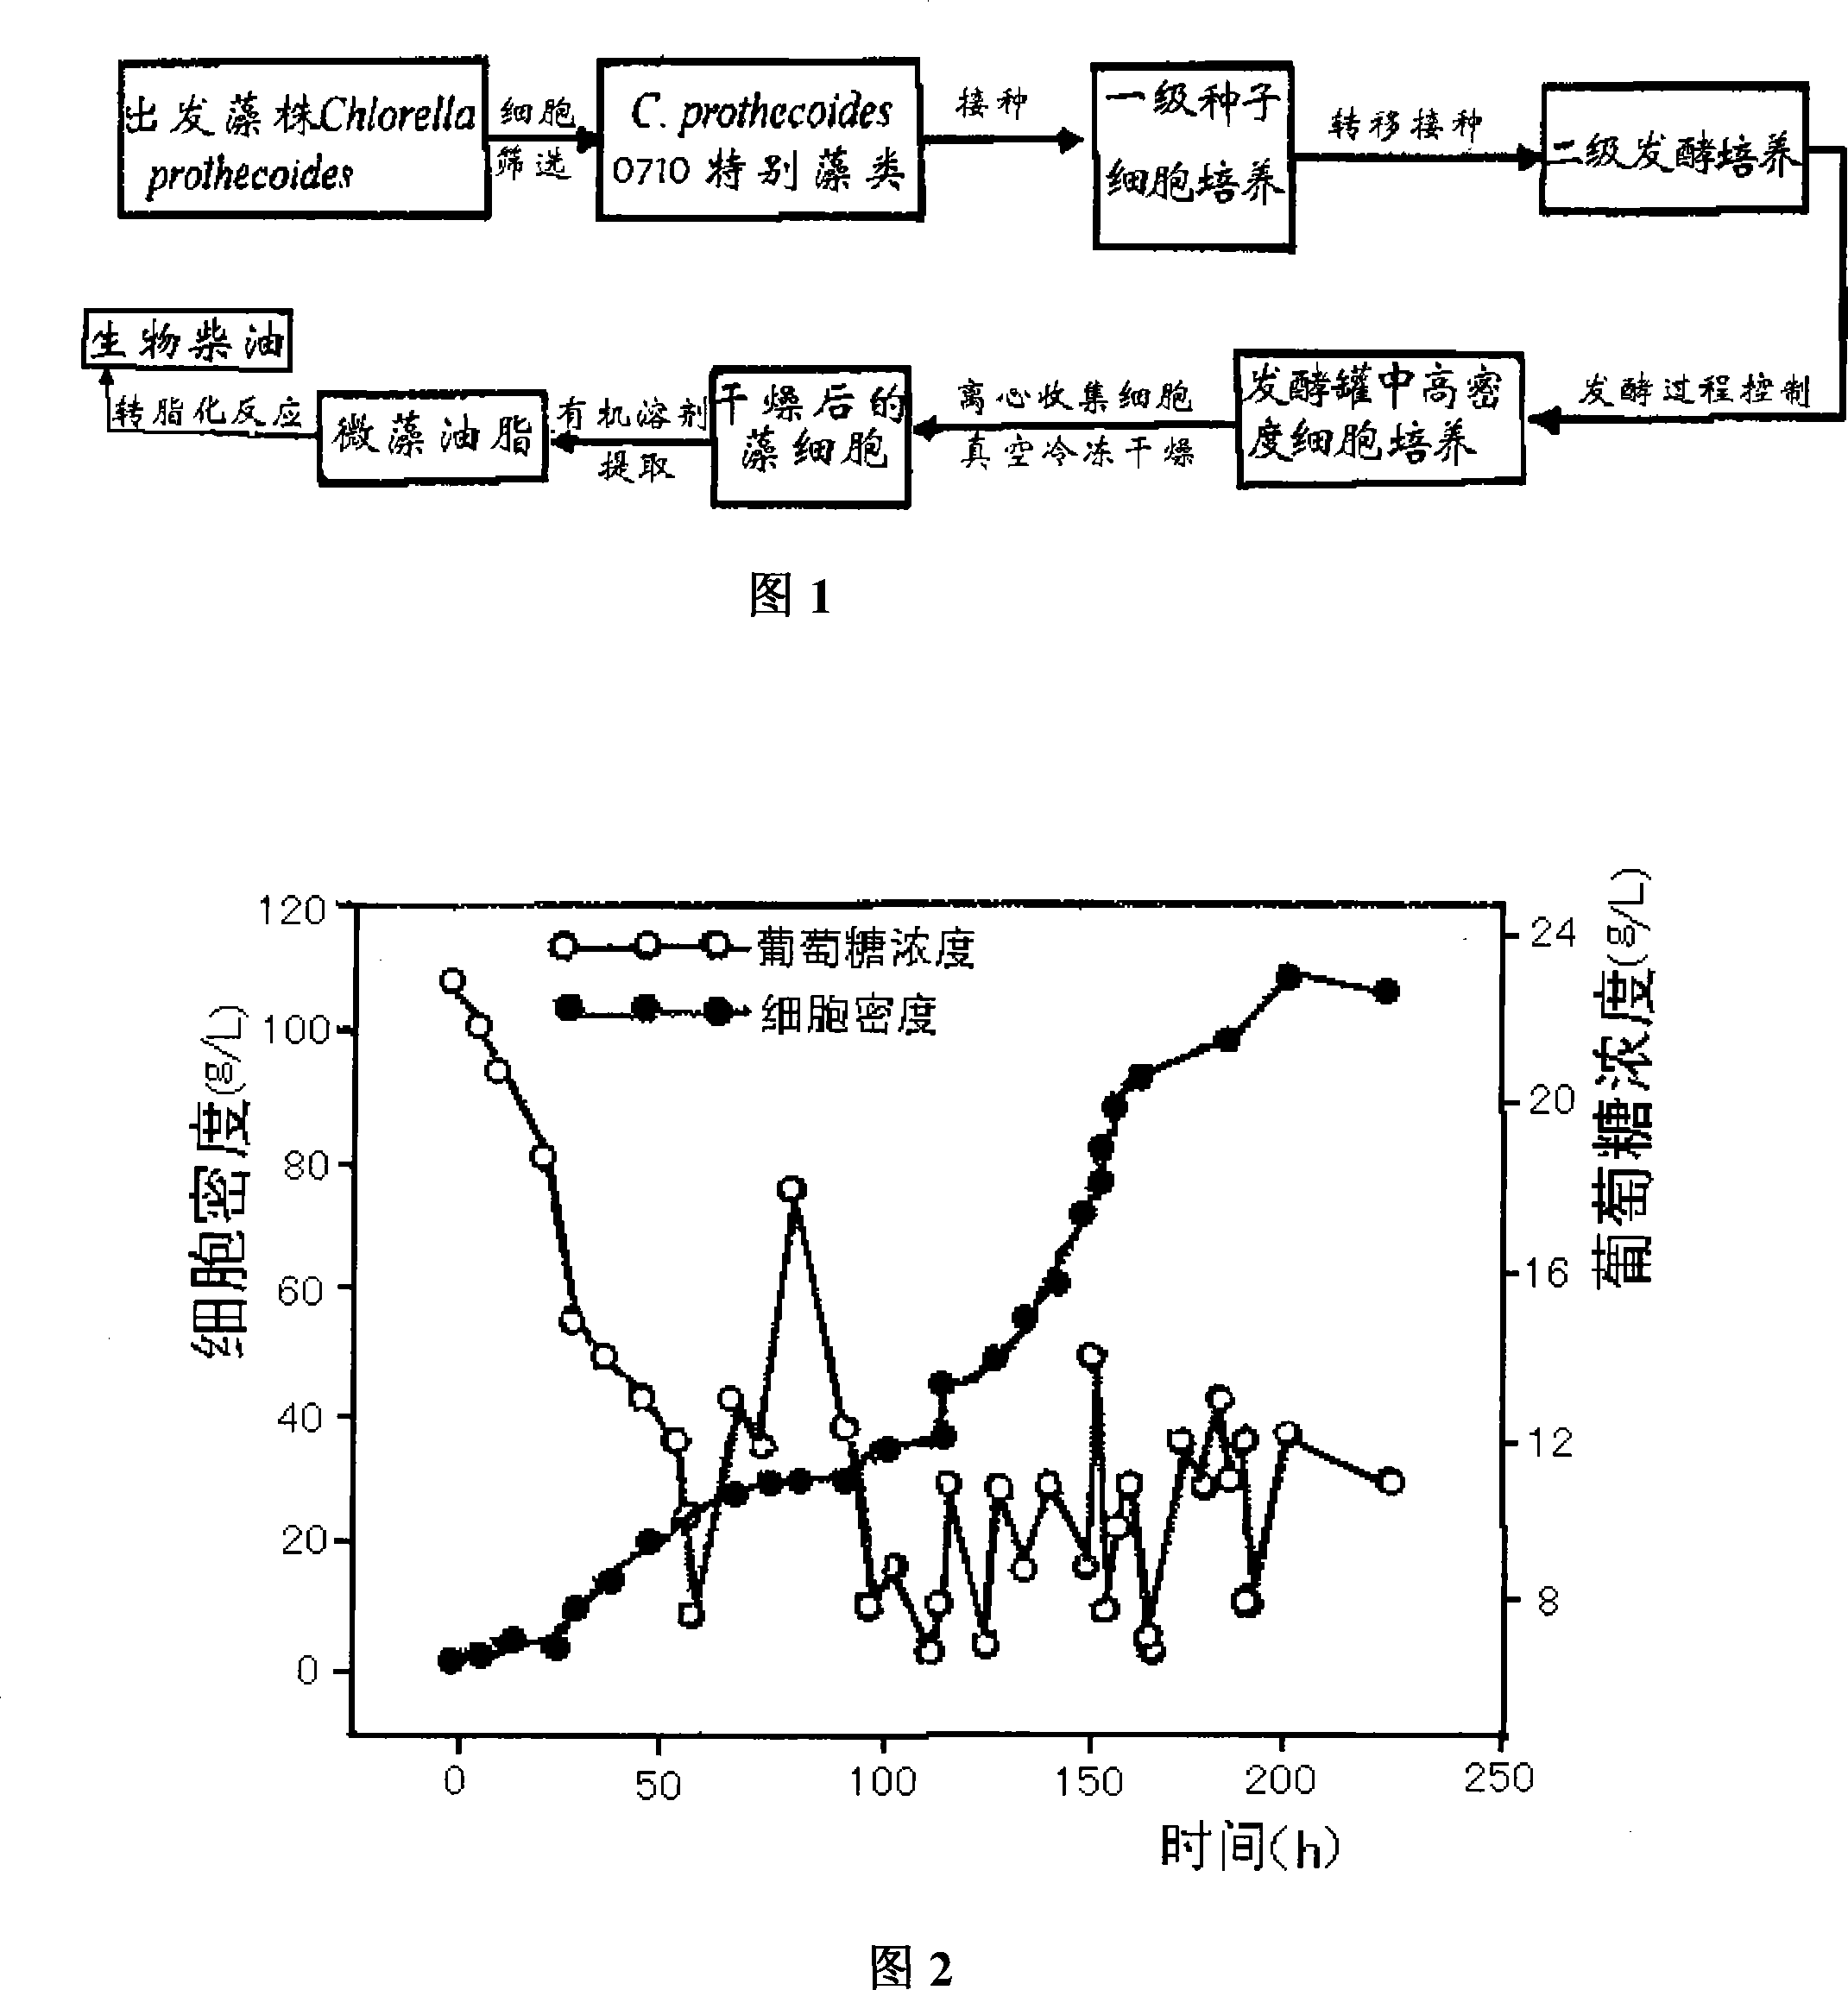 Method for producing biodiesel by high-density fermentation of heterotrophic chlorella